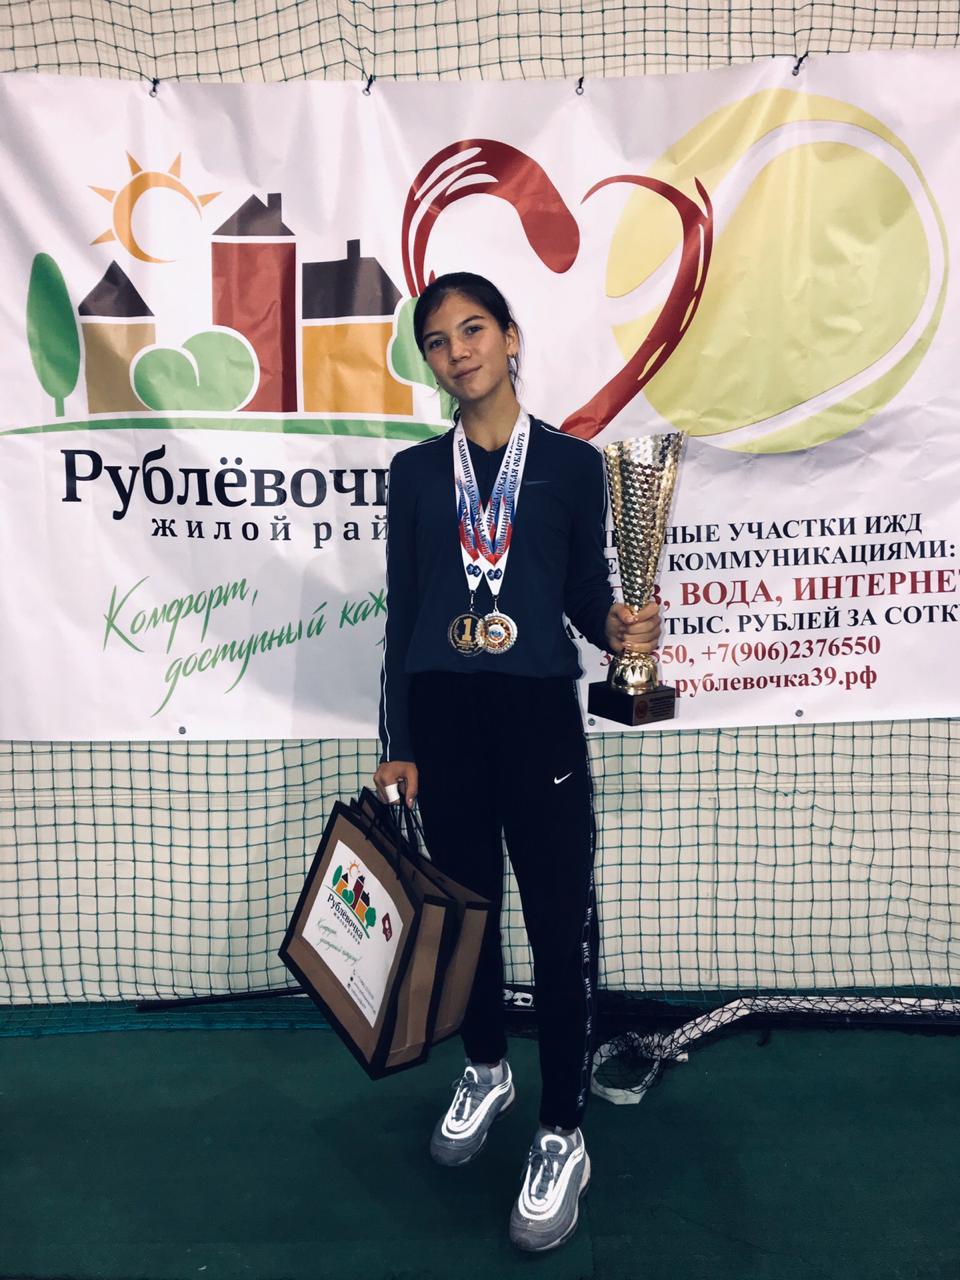 Ясмина Нигаметзянова завоевала две медали на турнире в Калининграде!